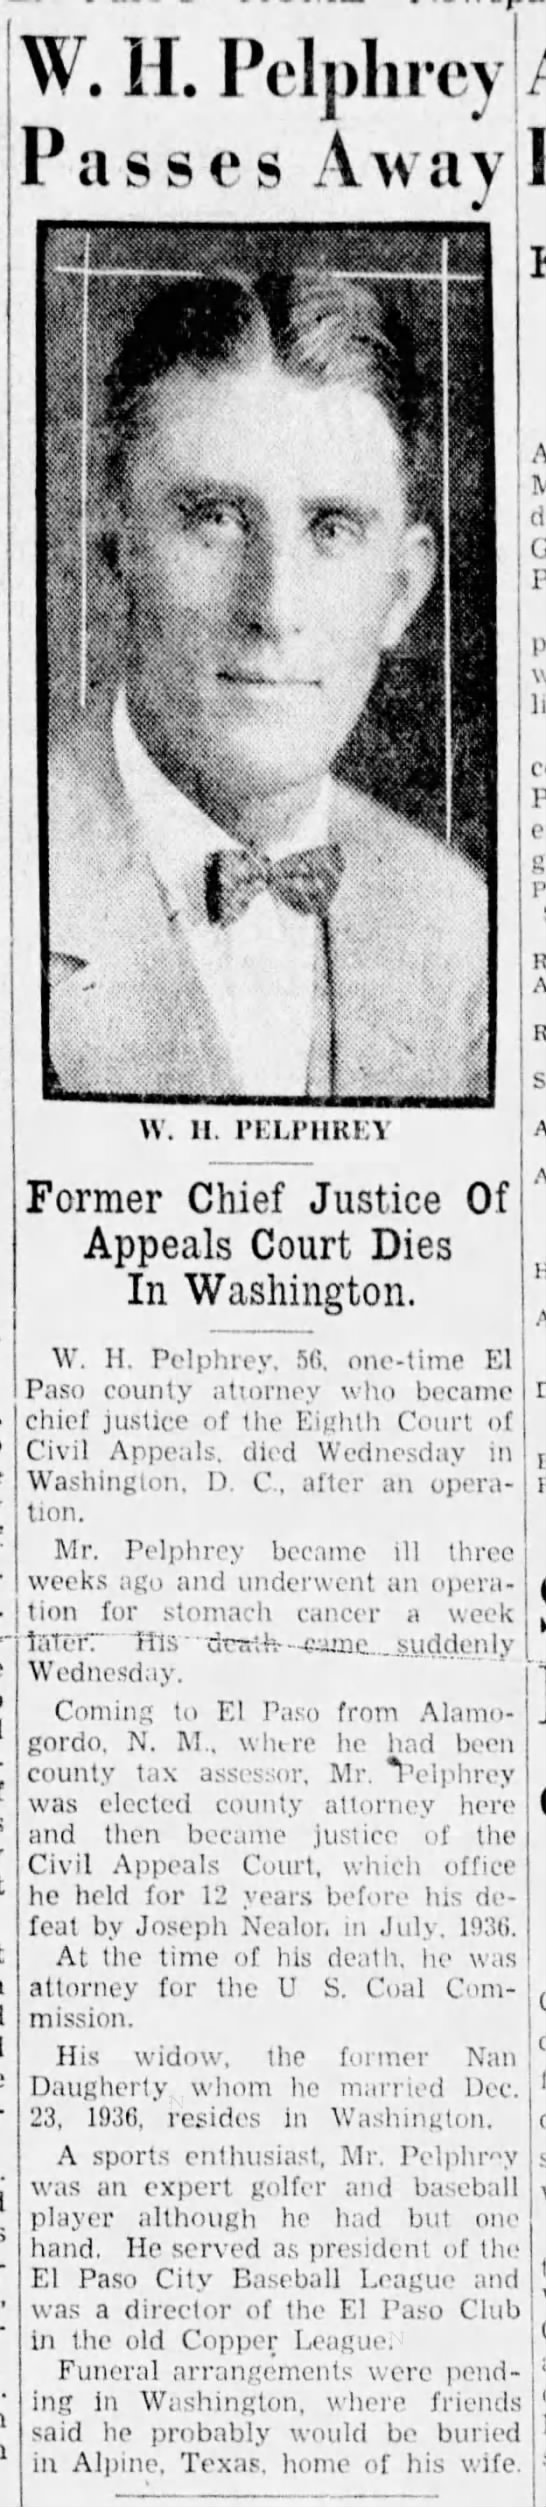 W. H. Pelphrey Passes Away - 